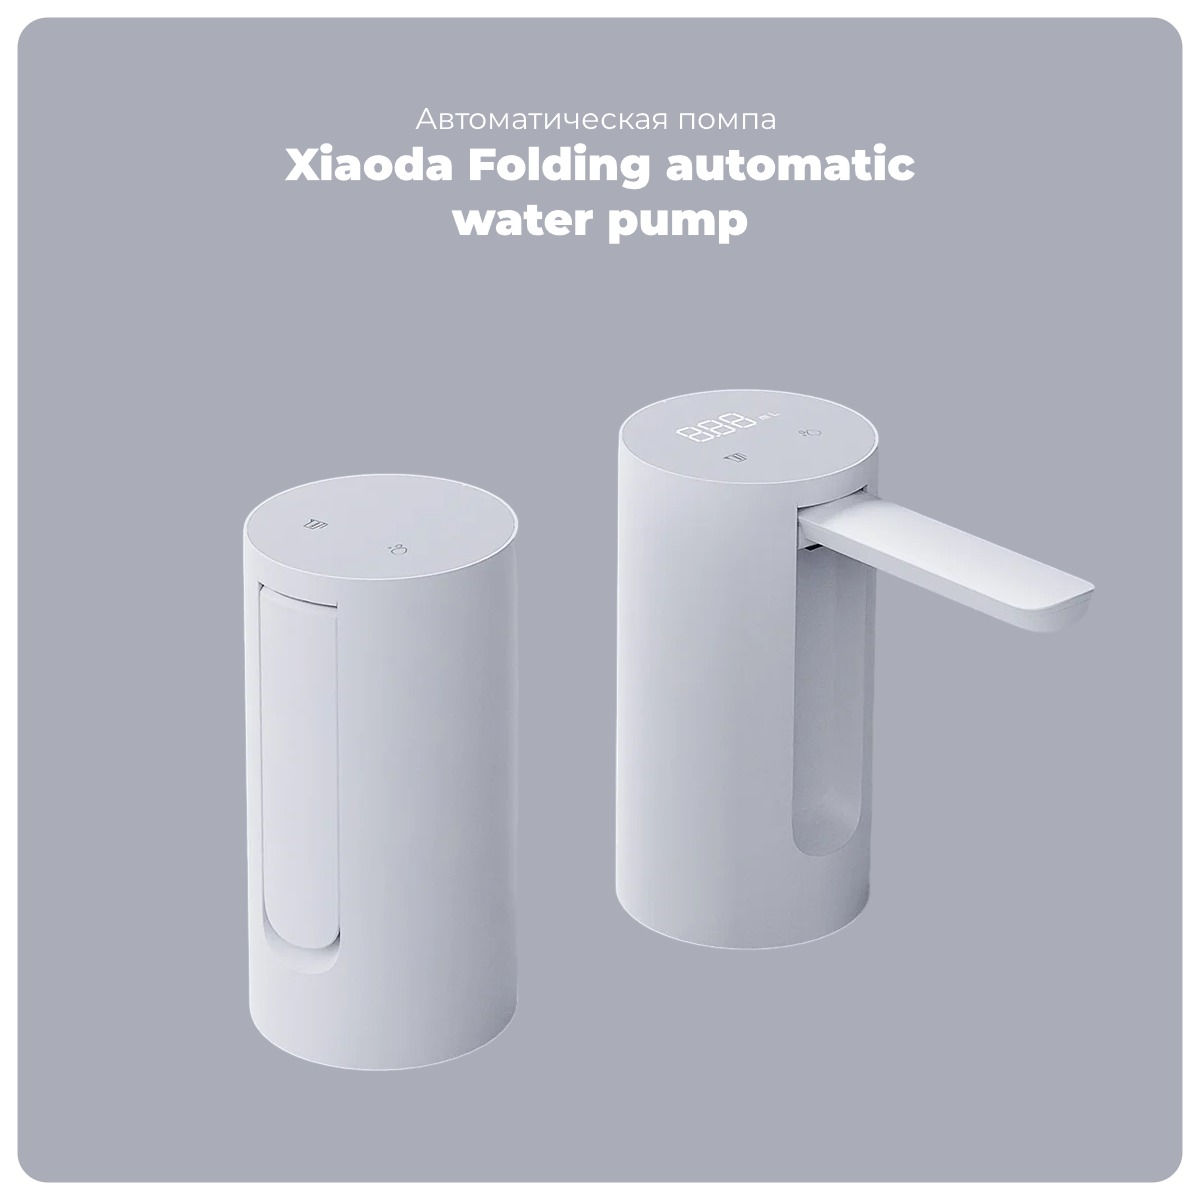 Xiaoda-Folding-automatic-water-pump-XD-ZDSSQ01-01